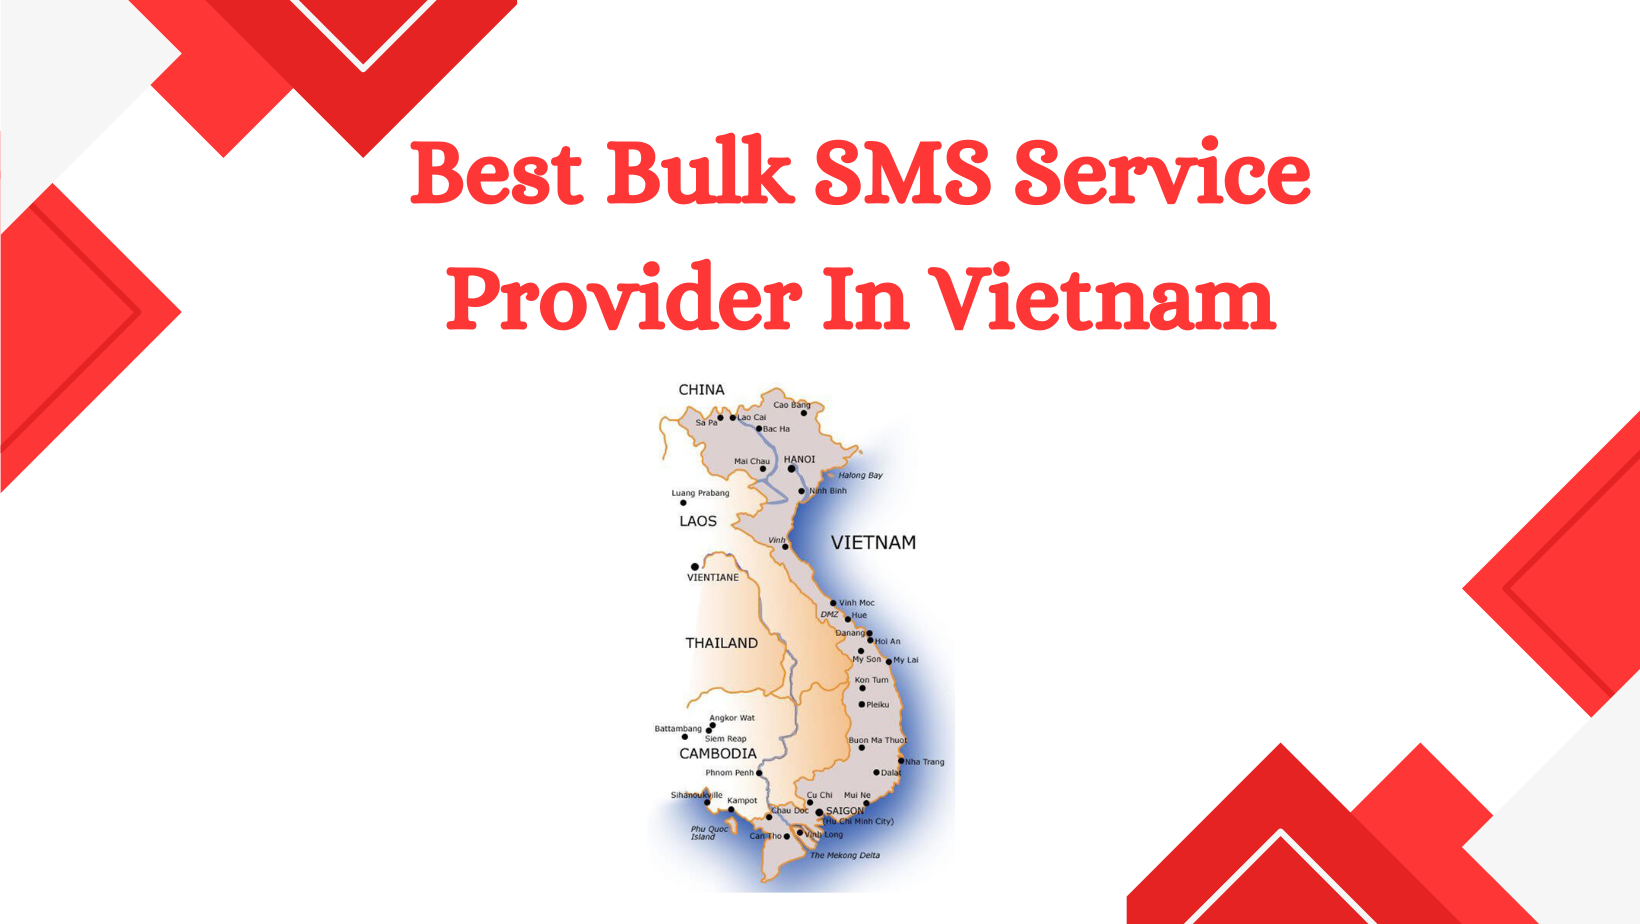 Best Bulk SMS Service Provider In Vietnam